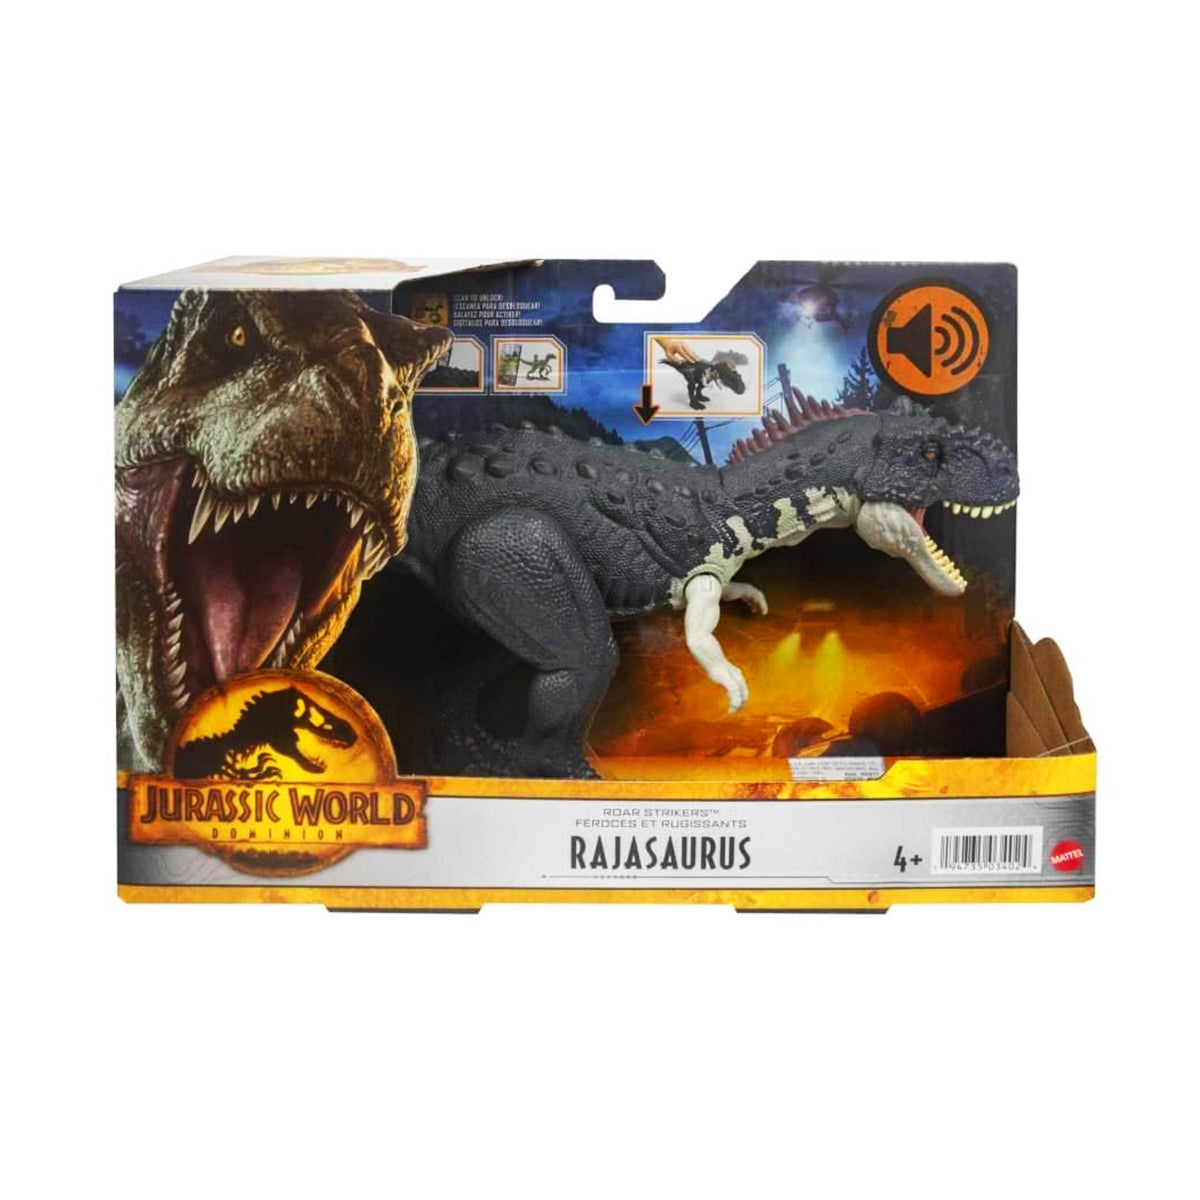 Jurassic World - Roar Strikers (Styles Vary) HDX17